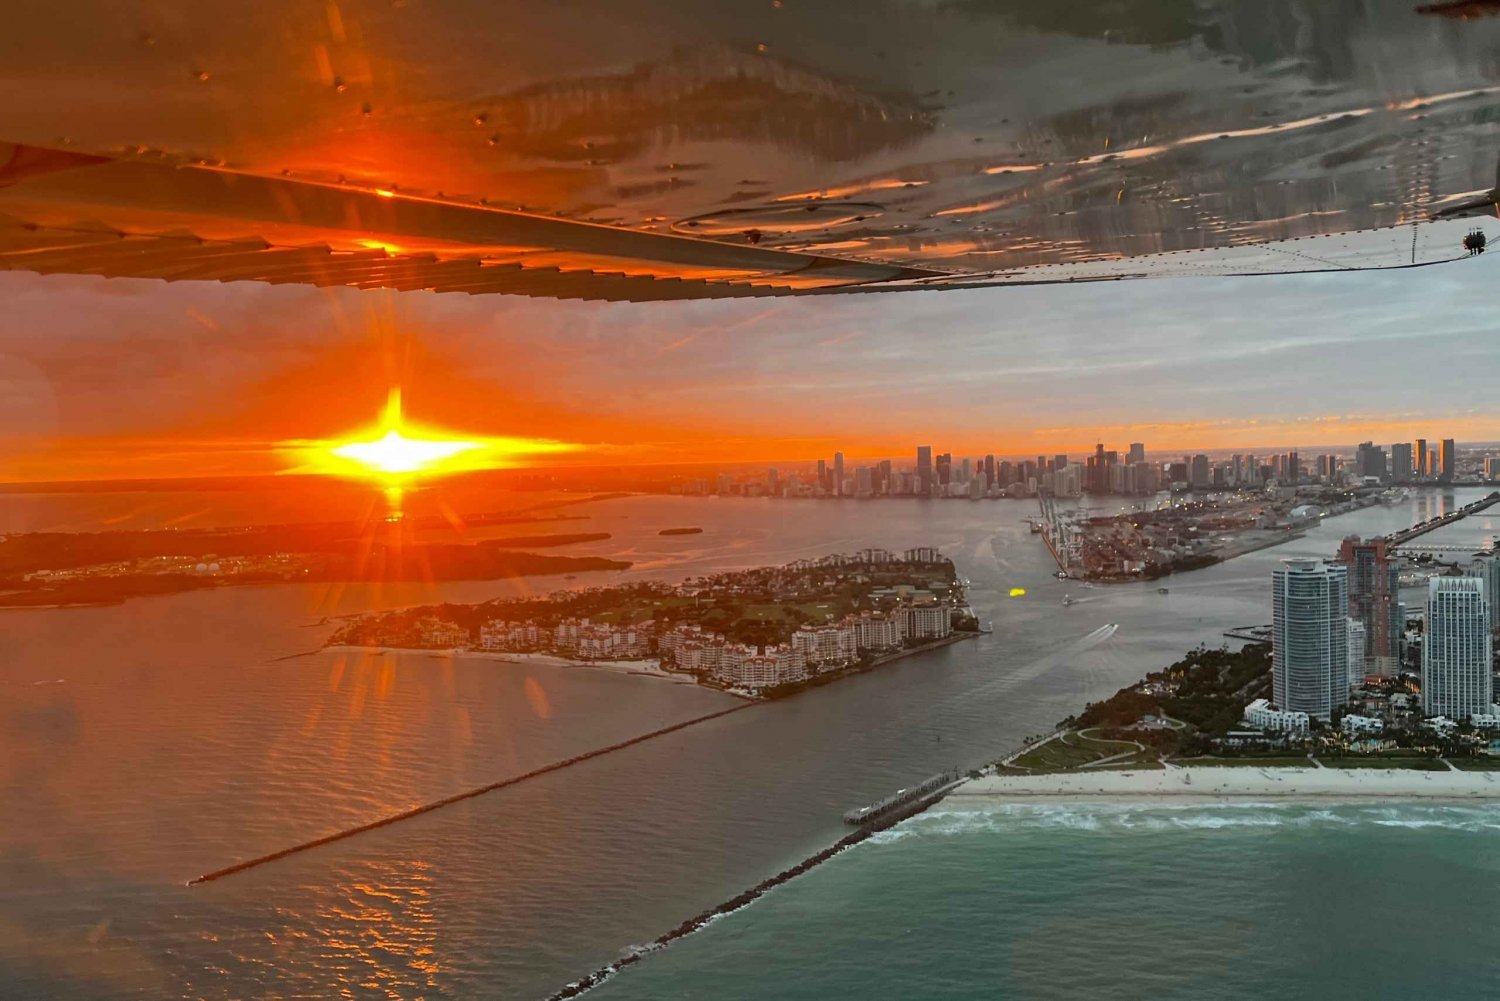 Miami: Private Romantic Sunset Flight with Champagne